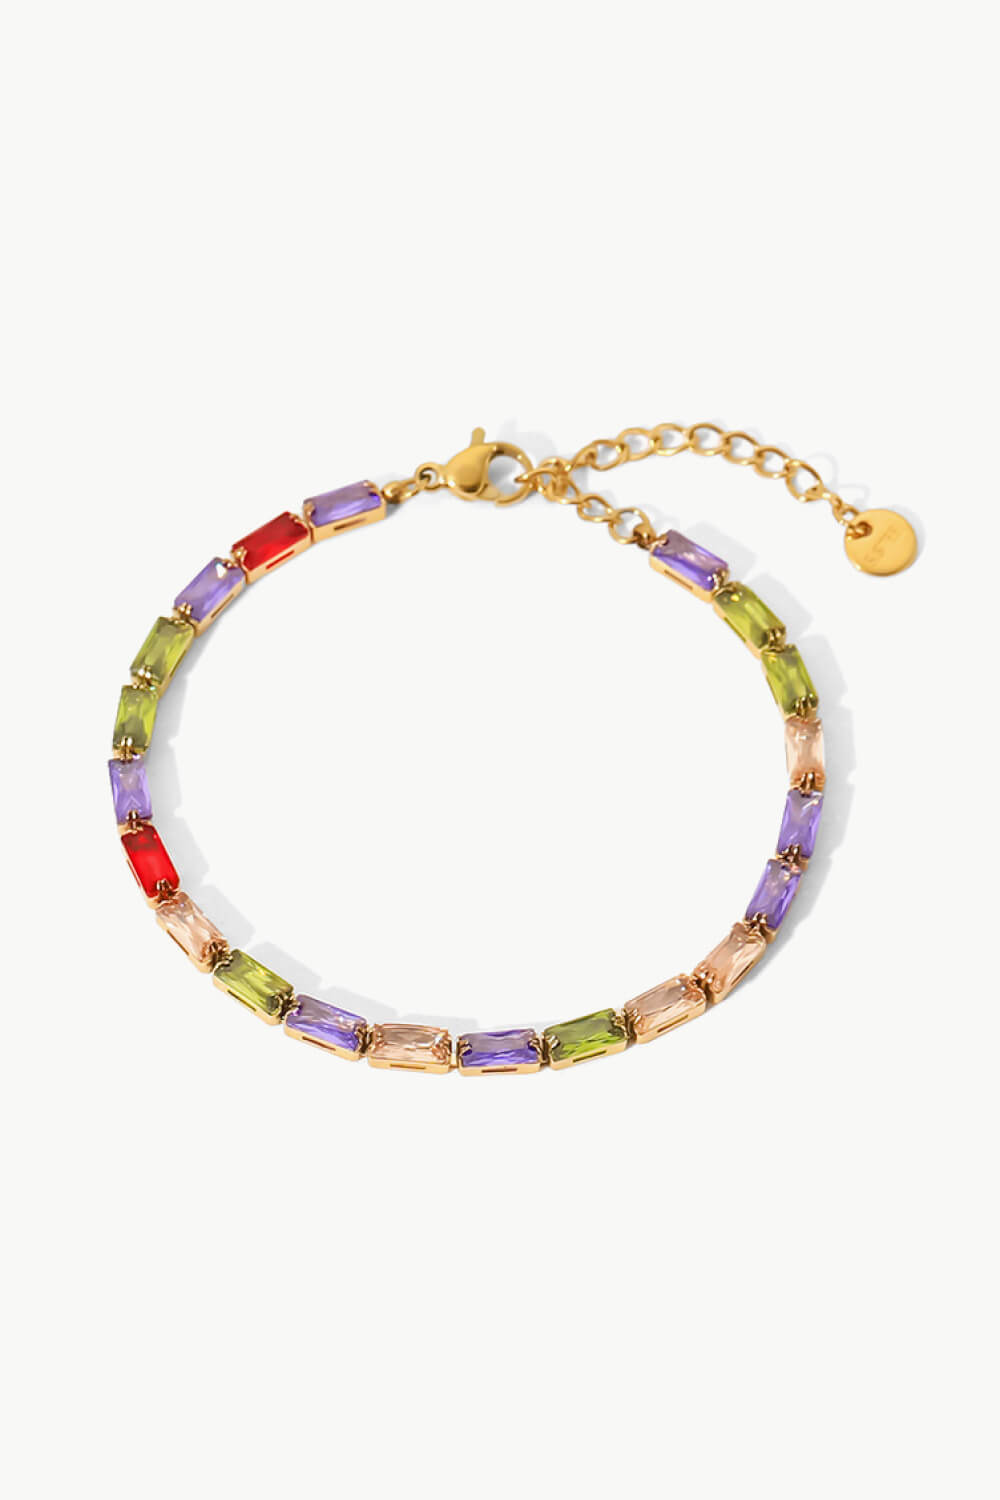 18K Gold Plated Multicolored Cubic Zirconia Bracelet - Multicolored / One Size - Women’s Jewelry - Bracelets - 1 - 2024